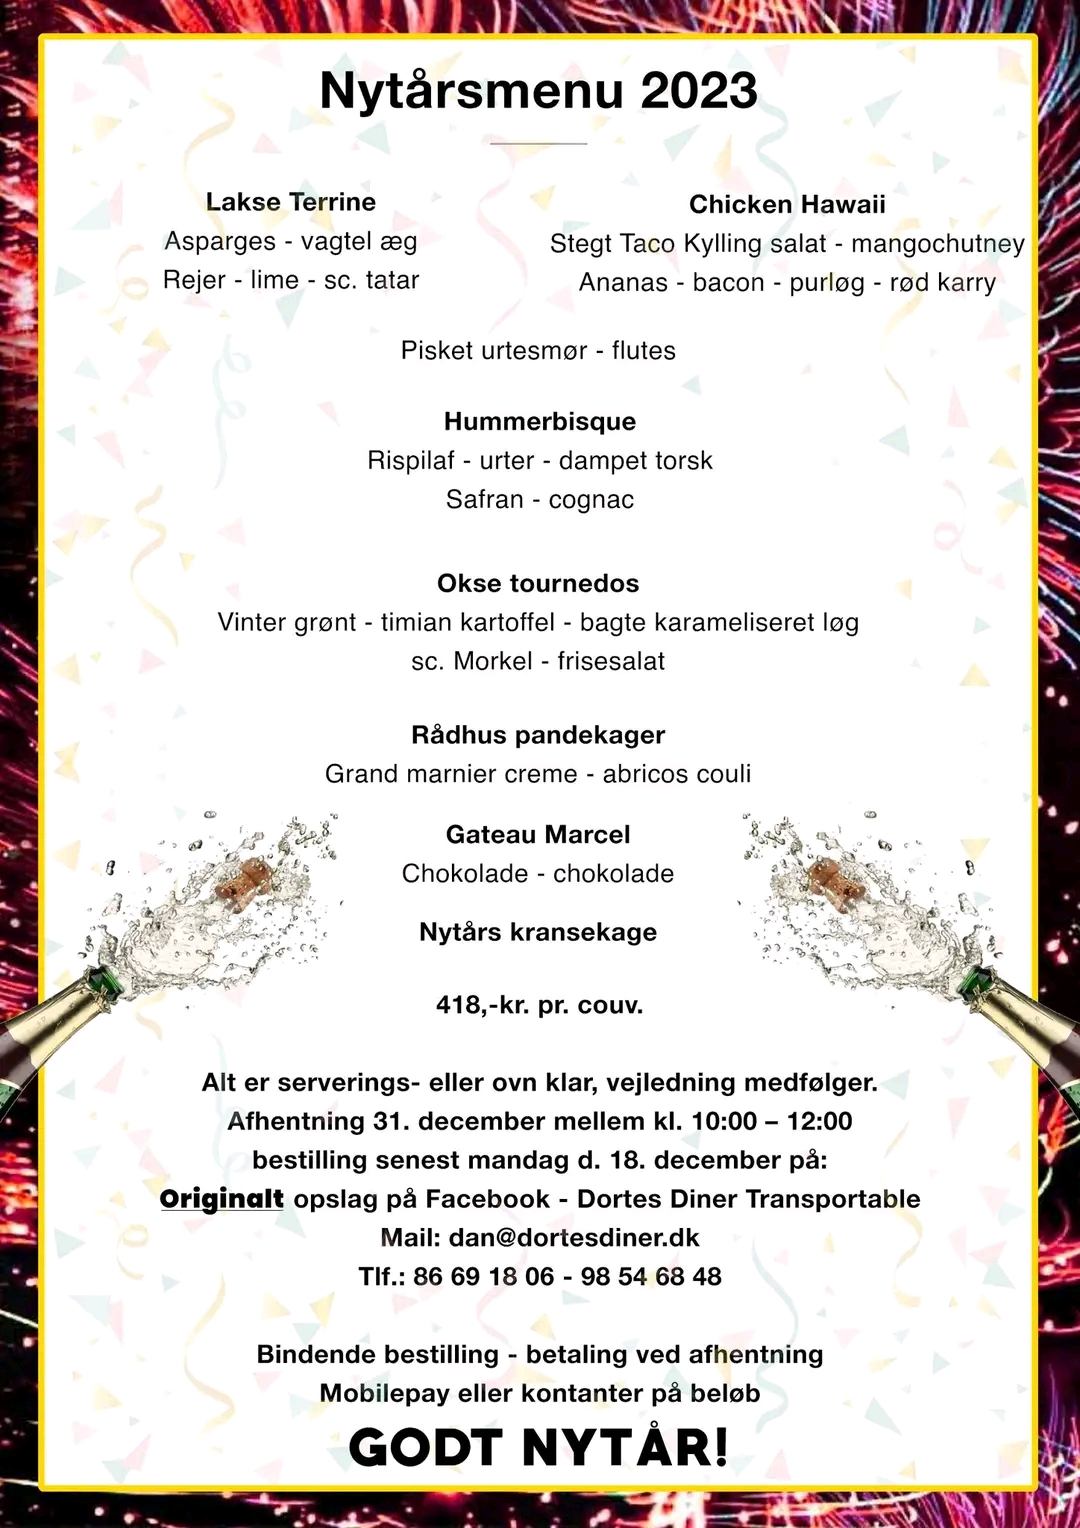 Dan og Dorte Nytårs menu